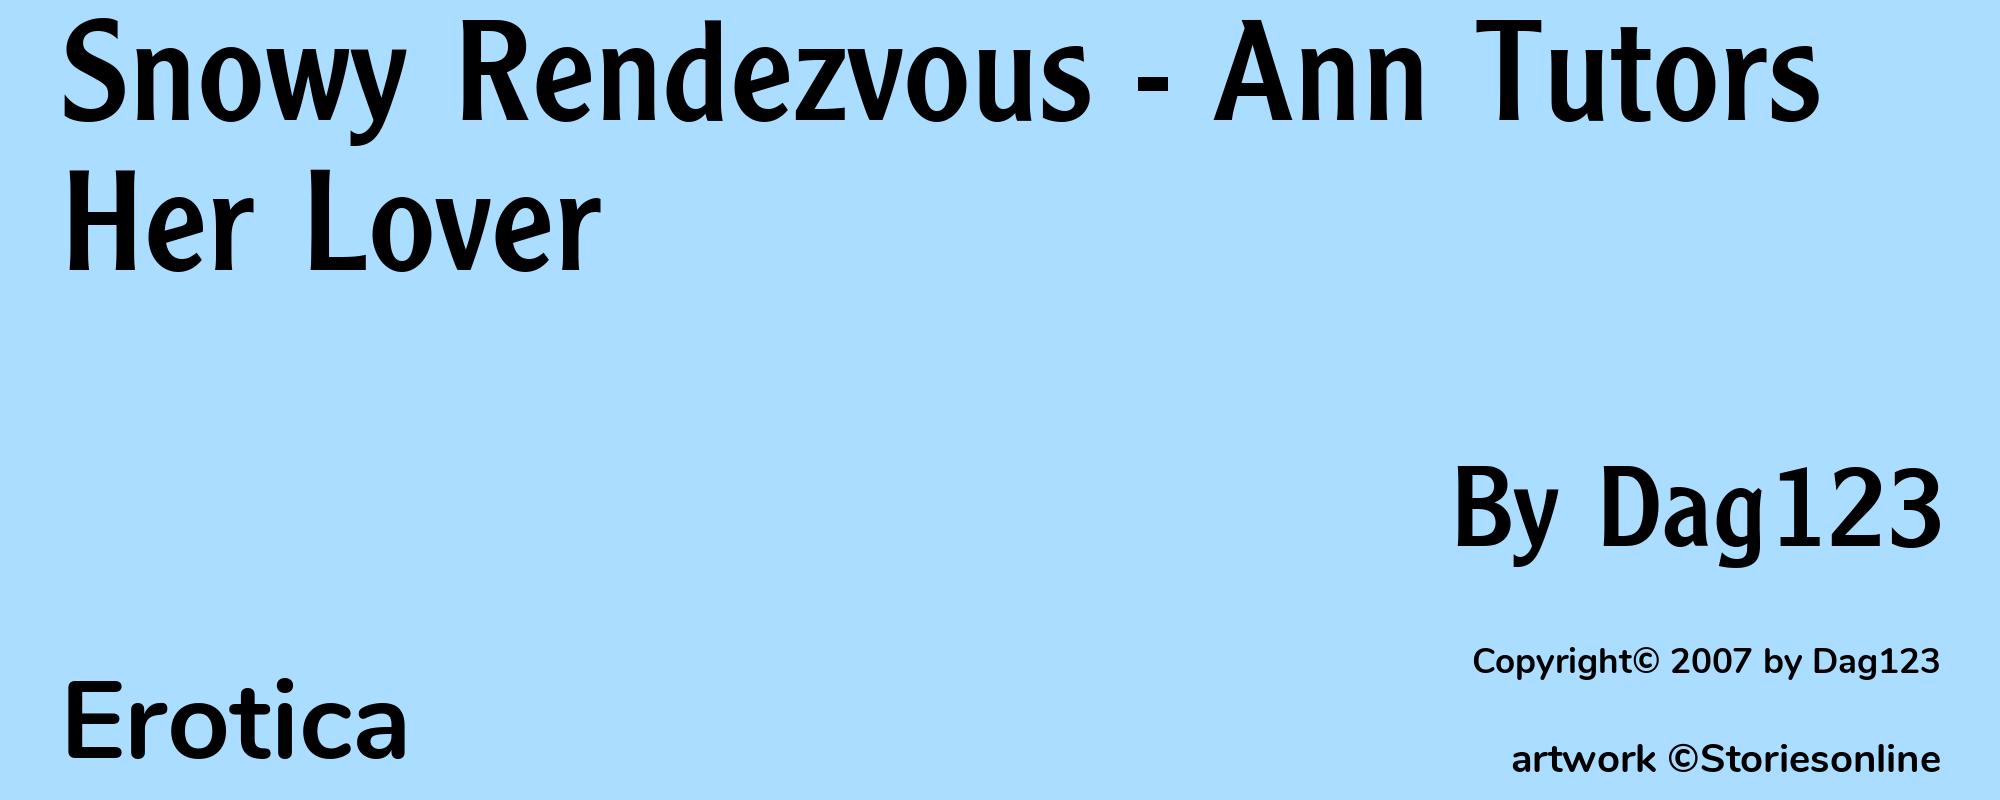 Snowy Rendezvous - Ann Tutors Her Lover - Cover